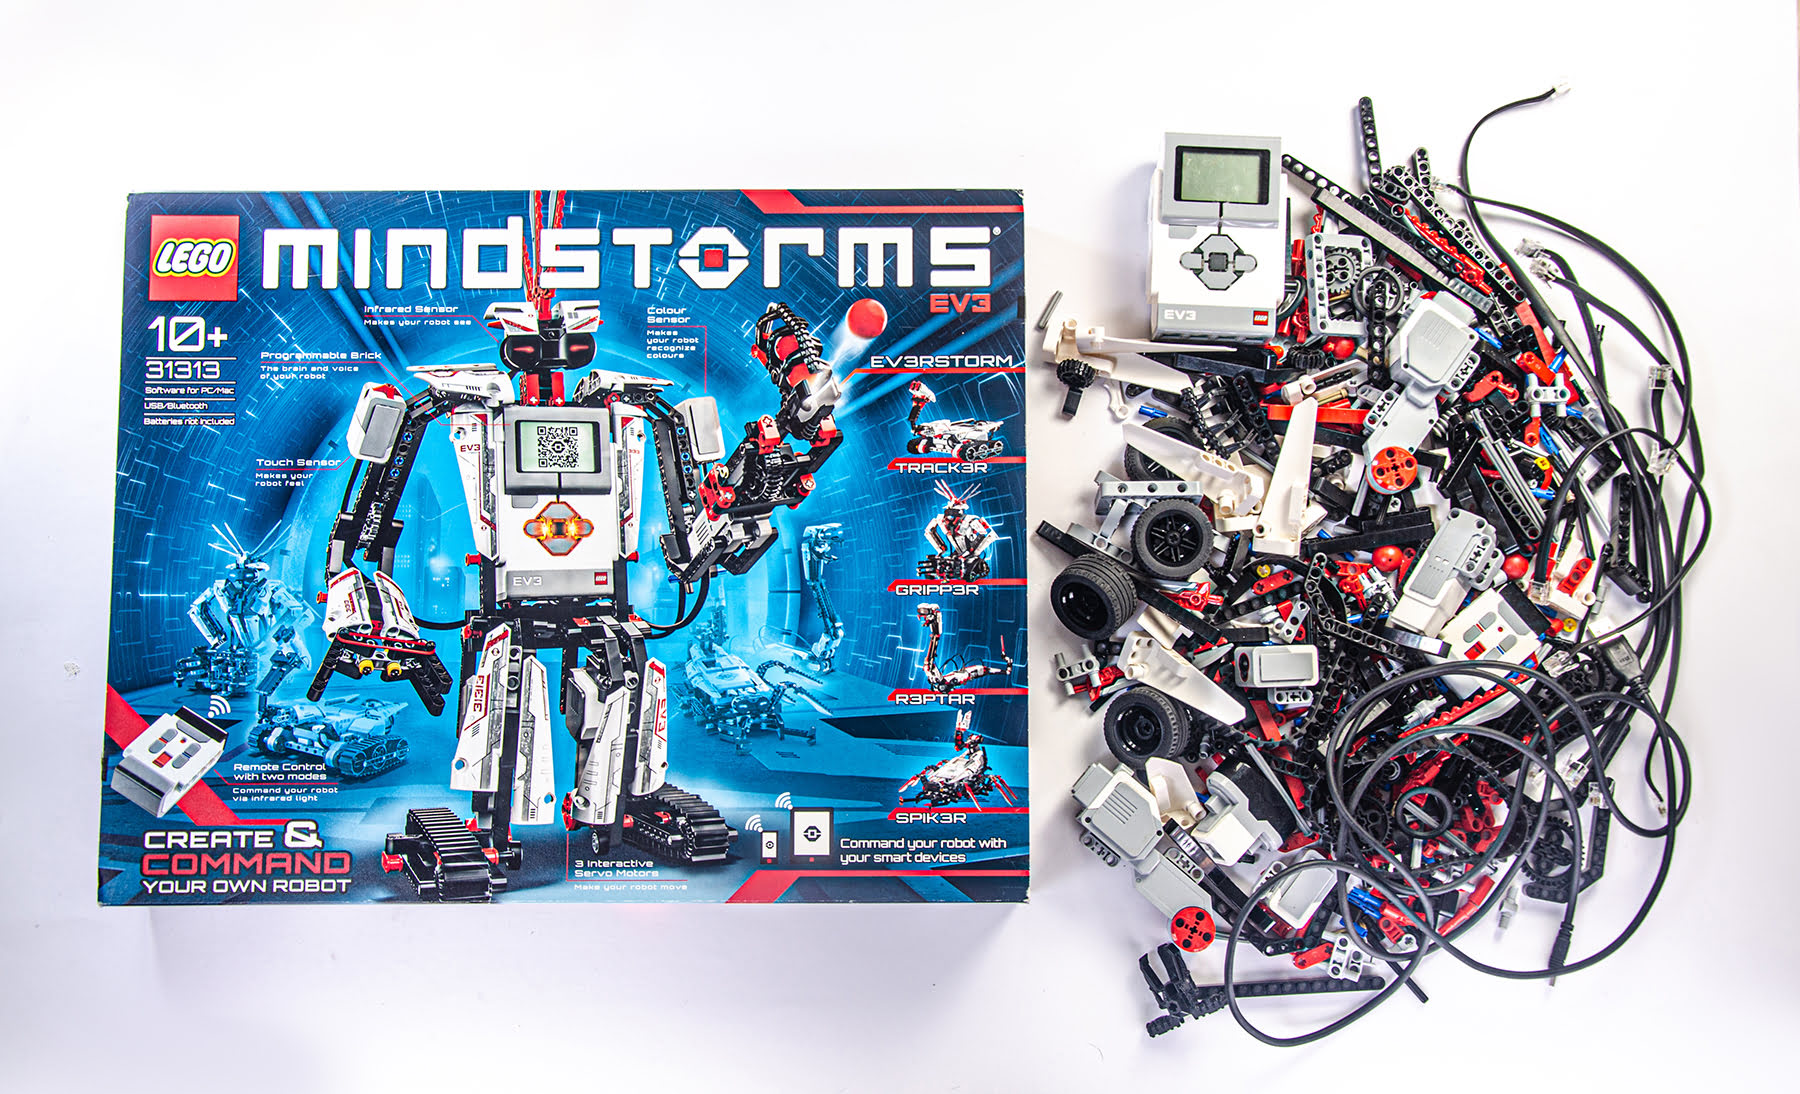 LEGO Mindstorms EV3 Comparing and